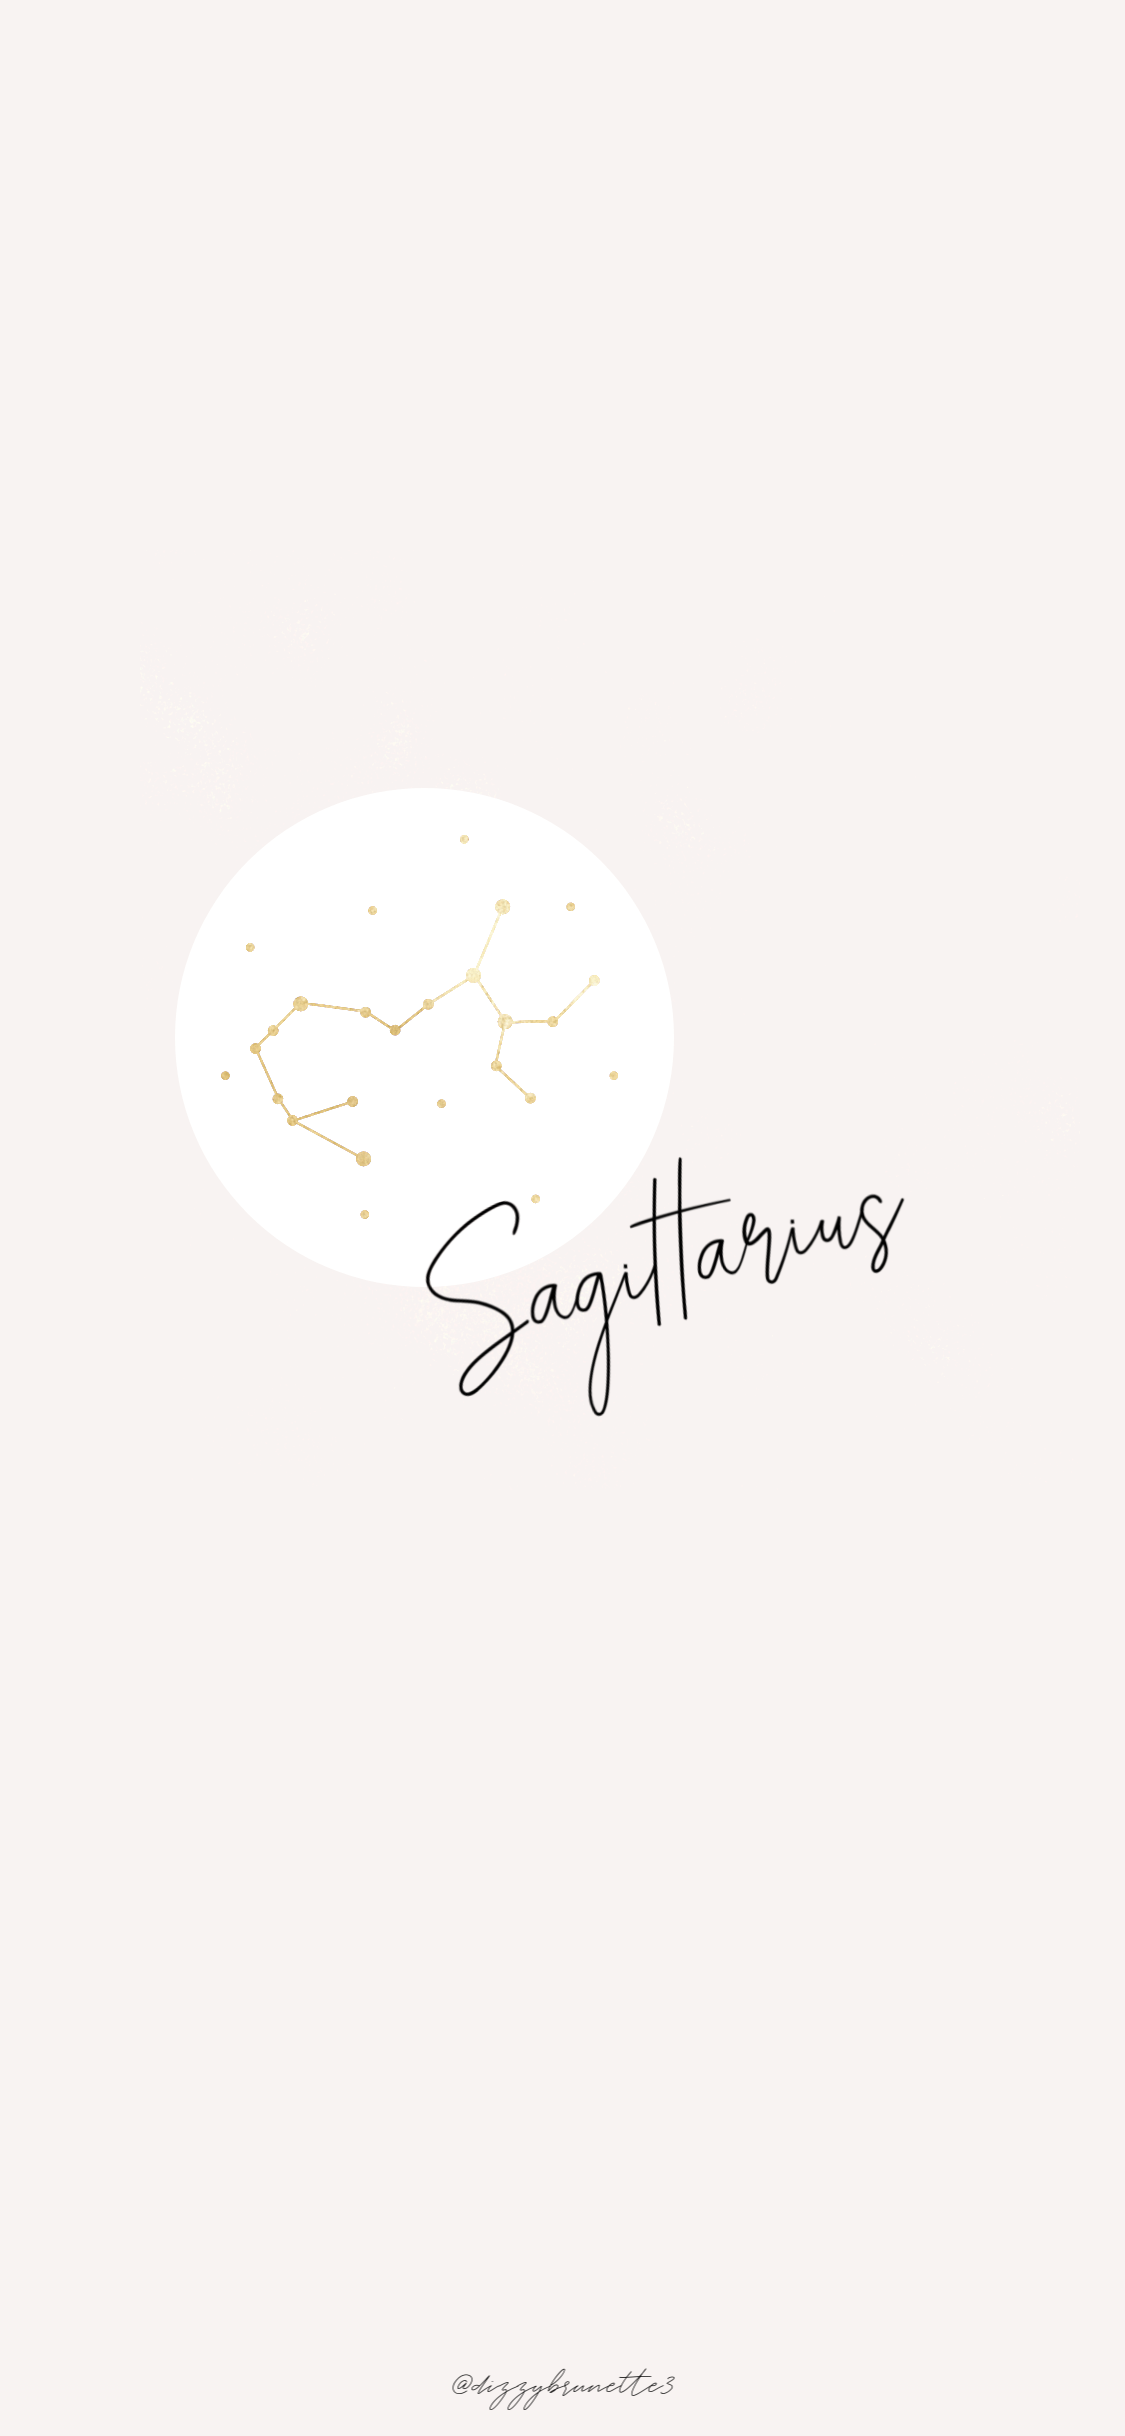 Sagittarius wallpaper for phone and desktop. Astrology phone background for the Sagittarius zodiac sign. - Sagittarius